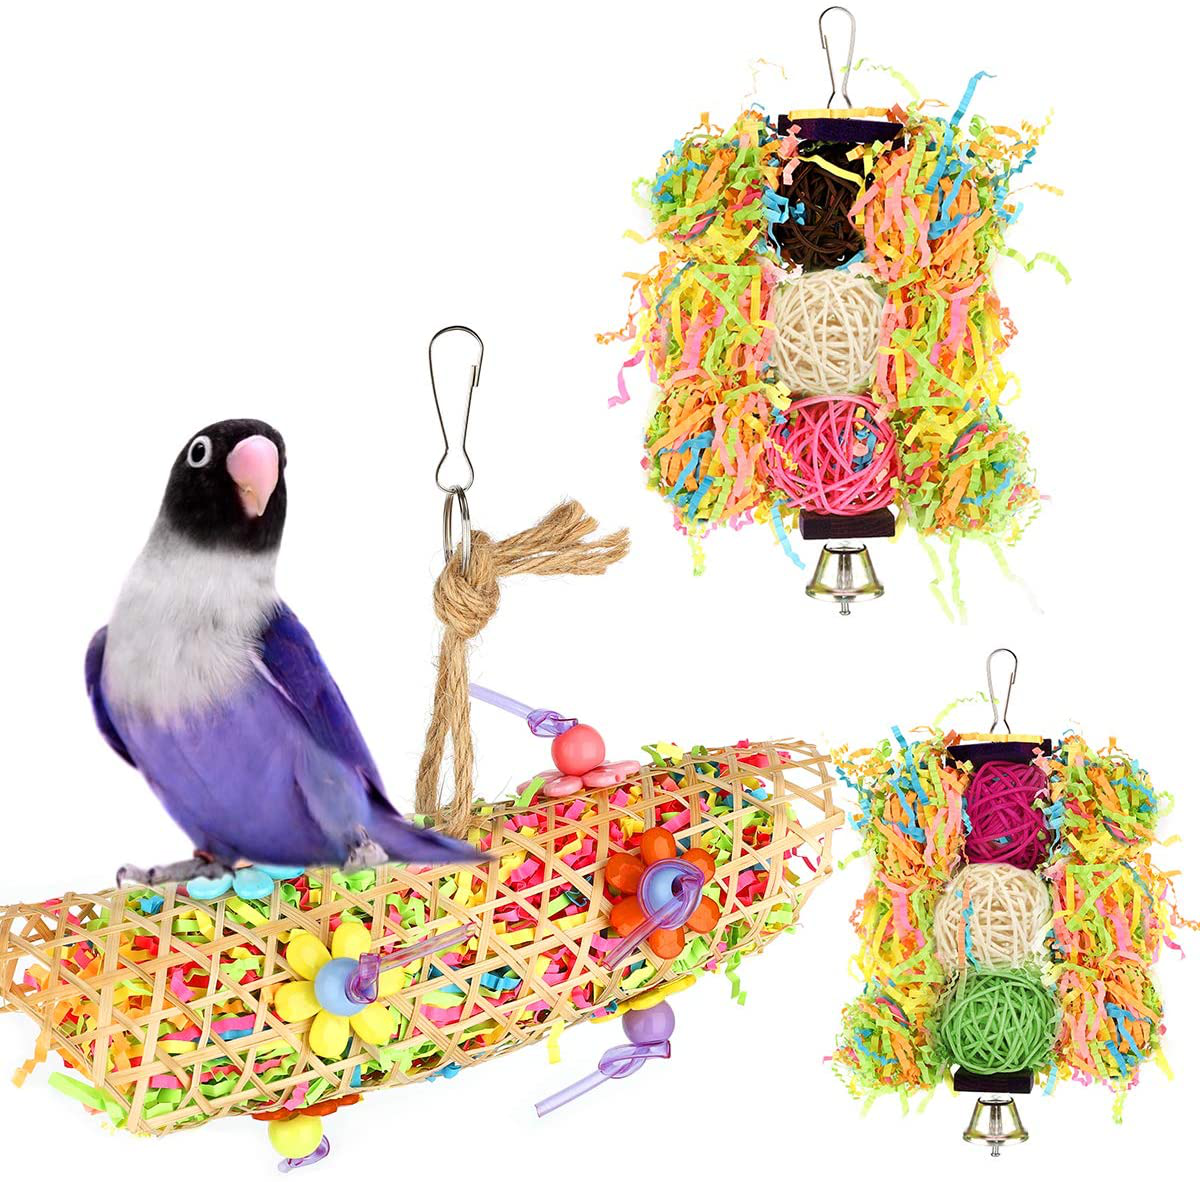 Pawaboo Bird Parrot Toys 3 Packs, Bird Chewing Foraging Shredder Toy Bird Cage Hammock Hanging Swing with Bells for Small Bird, Parakeets, Cockatiels, Conures, Budgie, Lovebirds, Hummingbird Animals & Pet Supplies > Pet Supplies > Bird Supplies > Bird Toys Pawaboo   